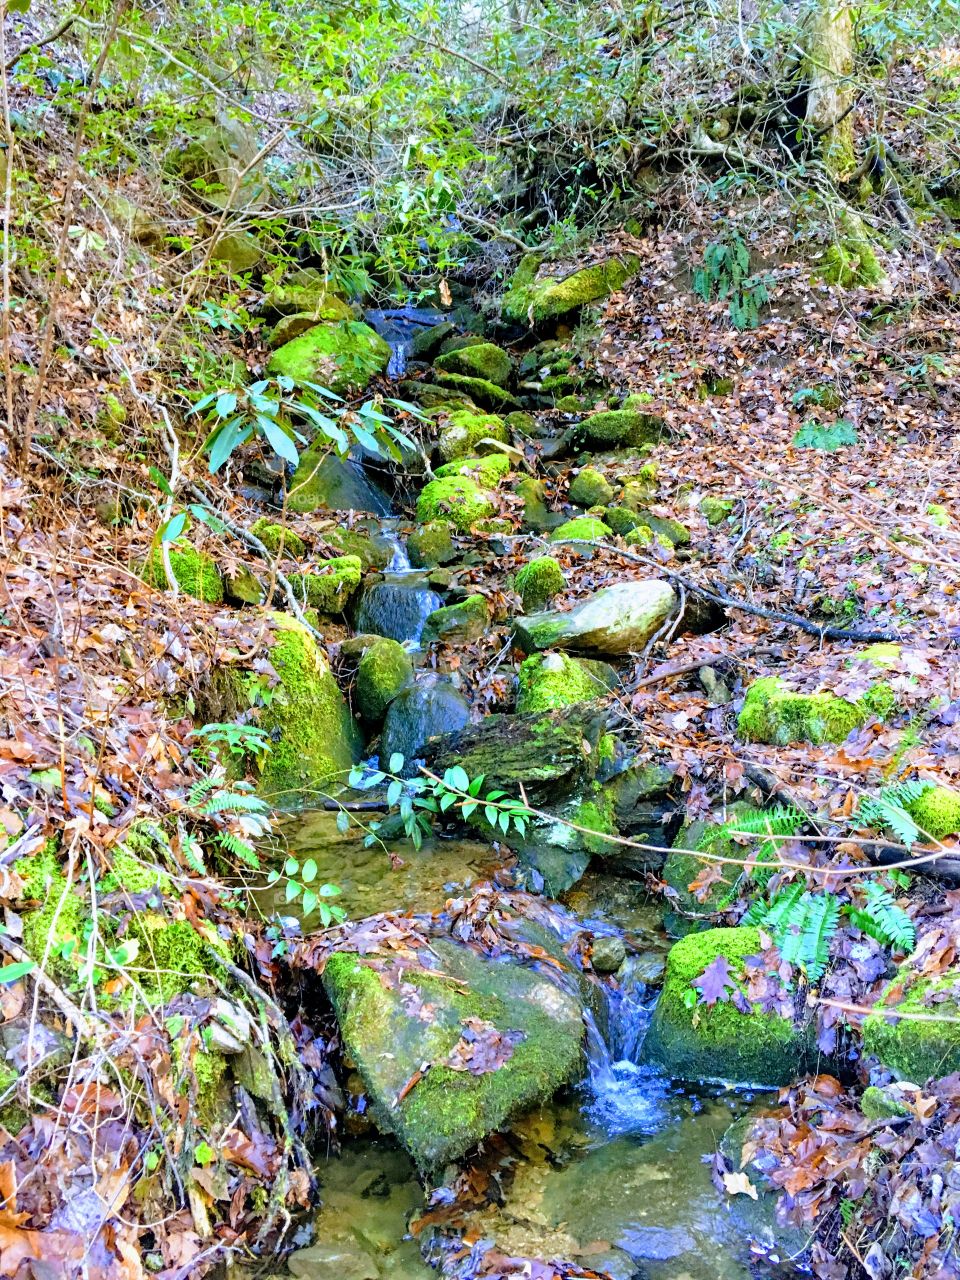 Trail side mountain stream